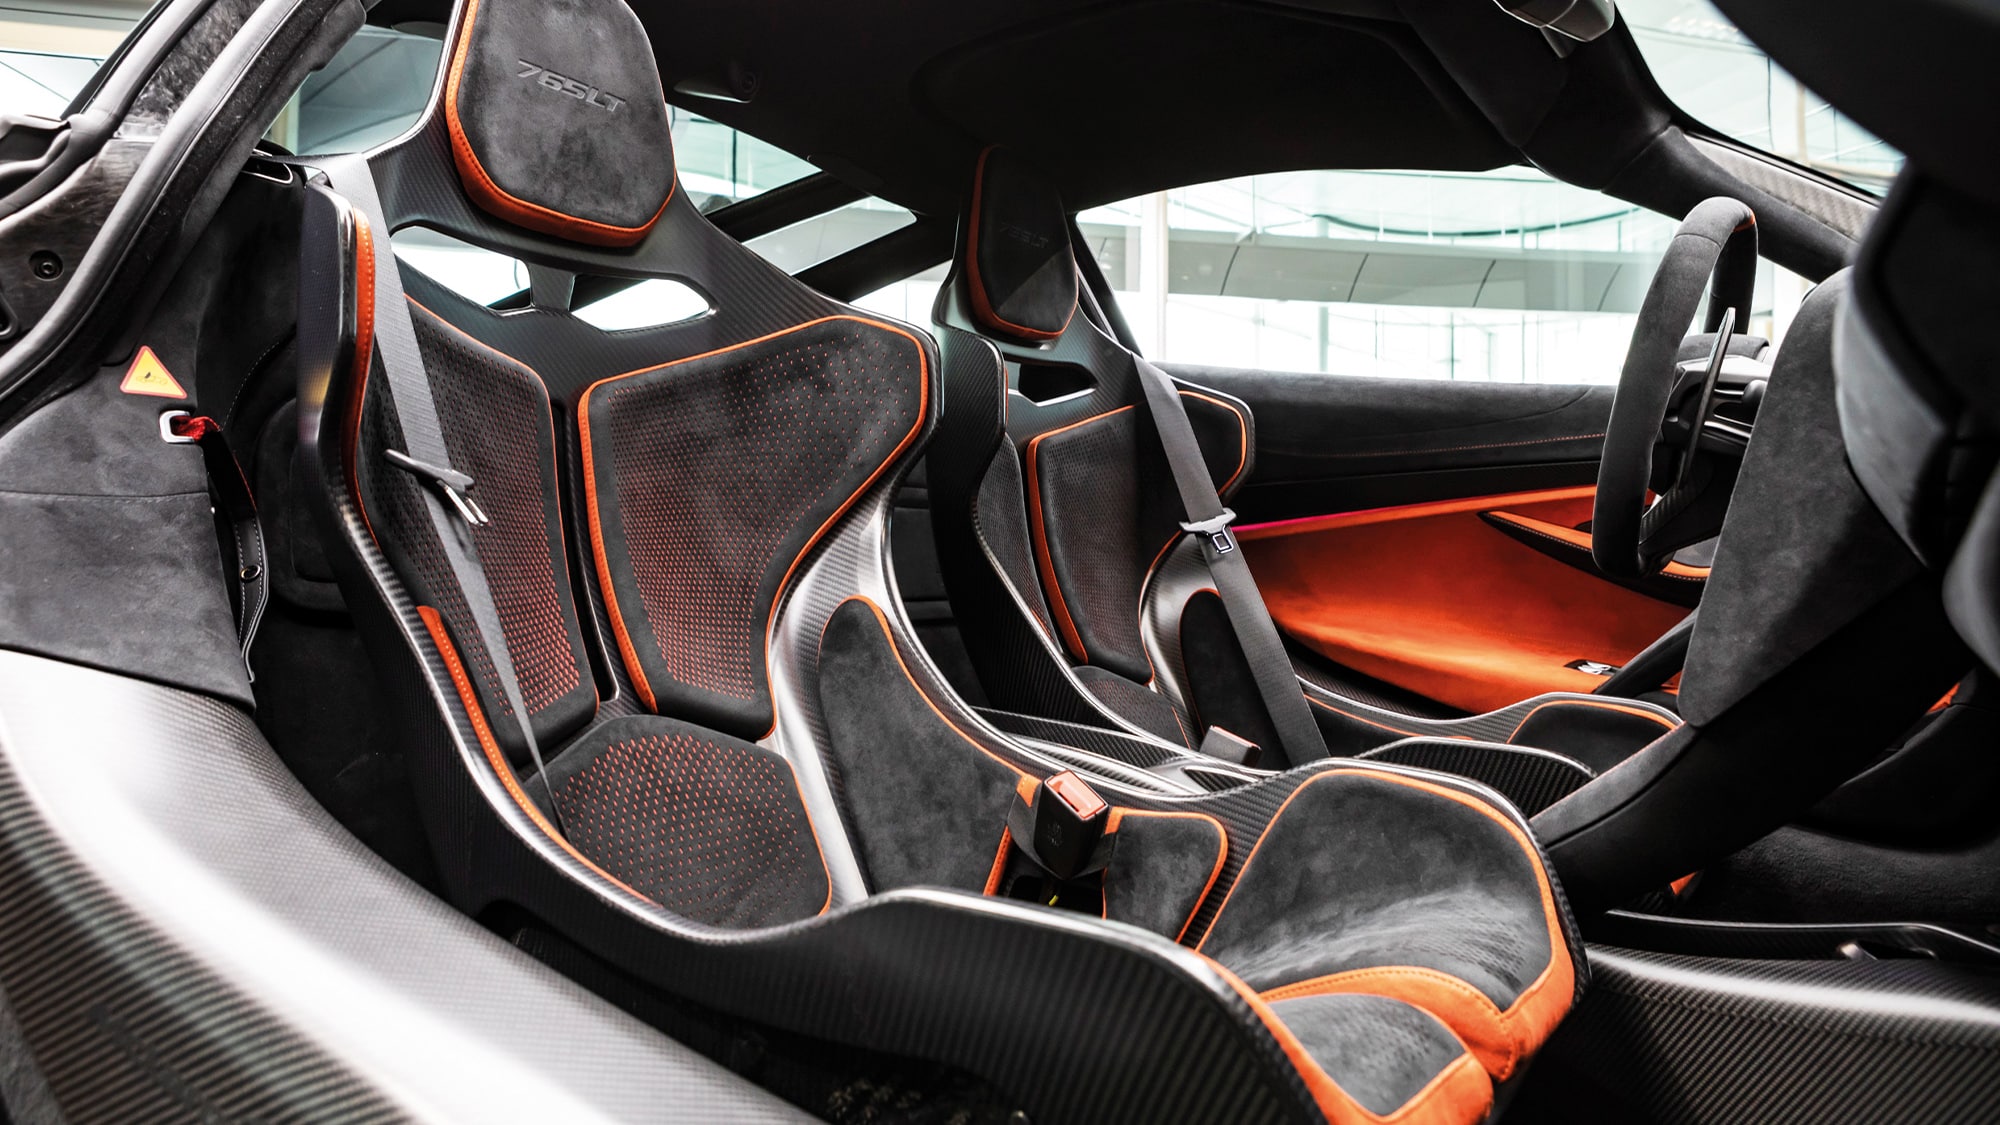 McLaren 765LT interior and seats